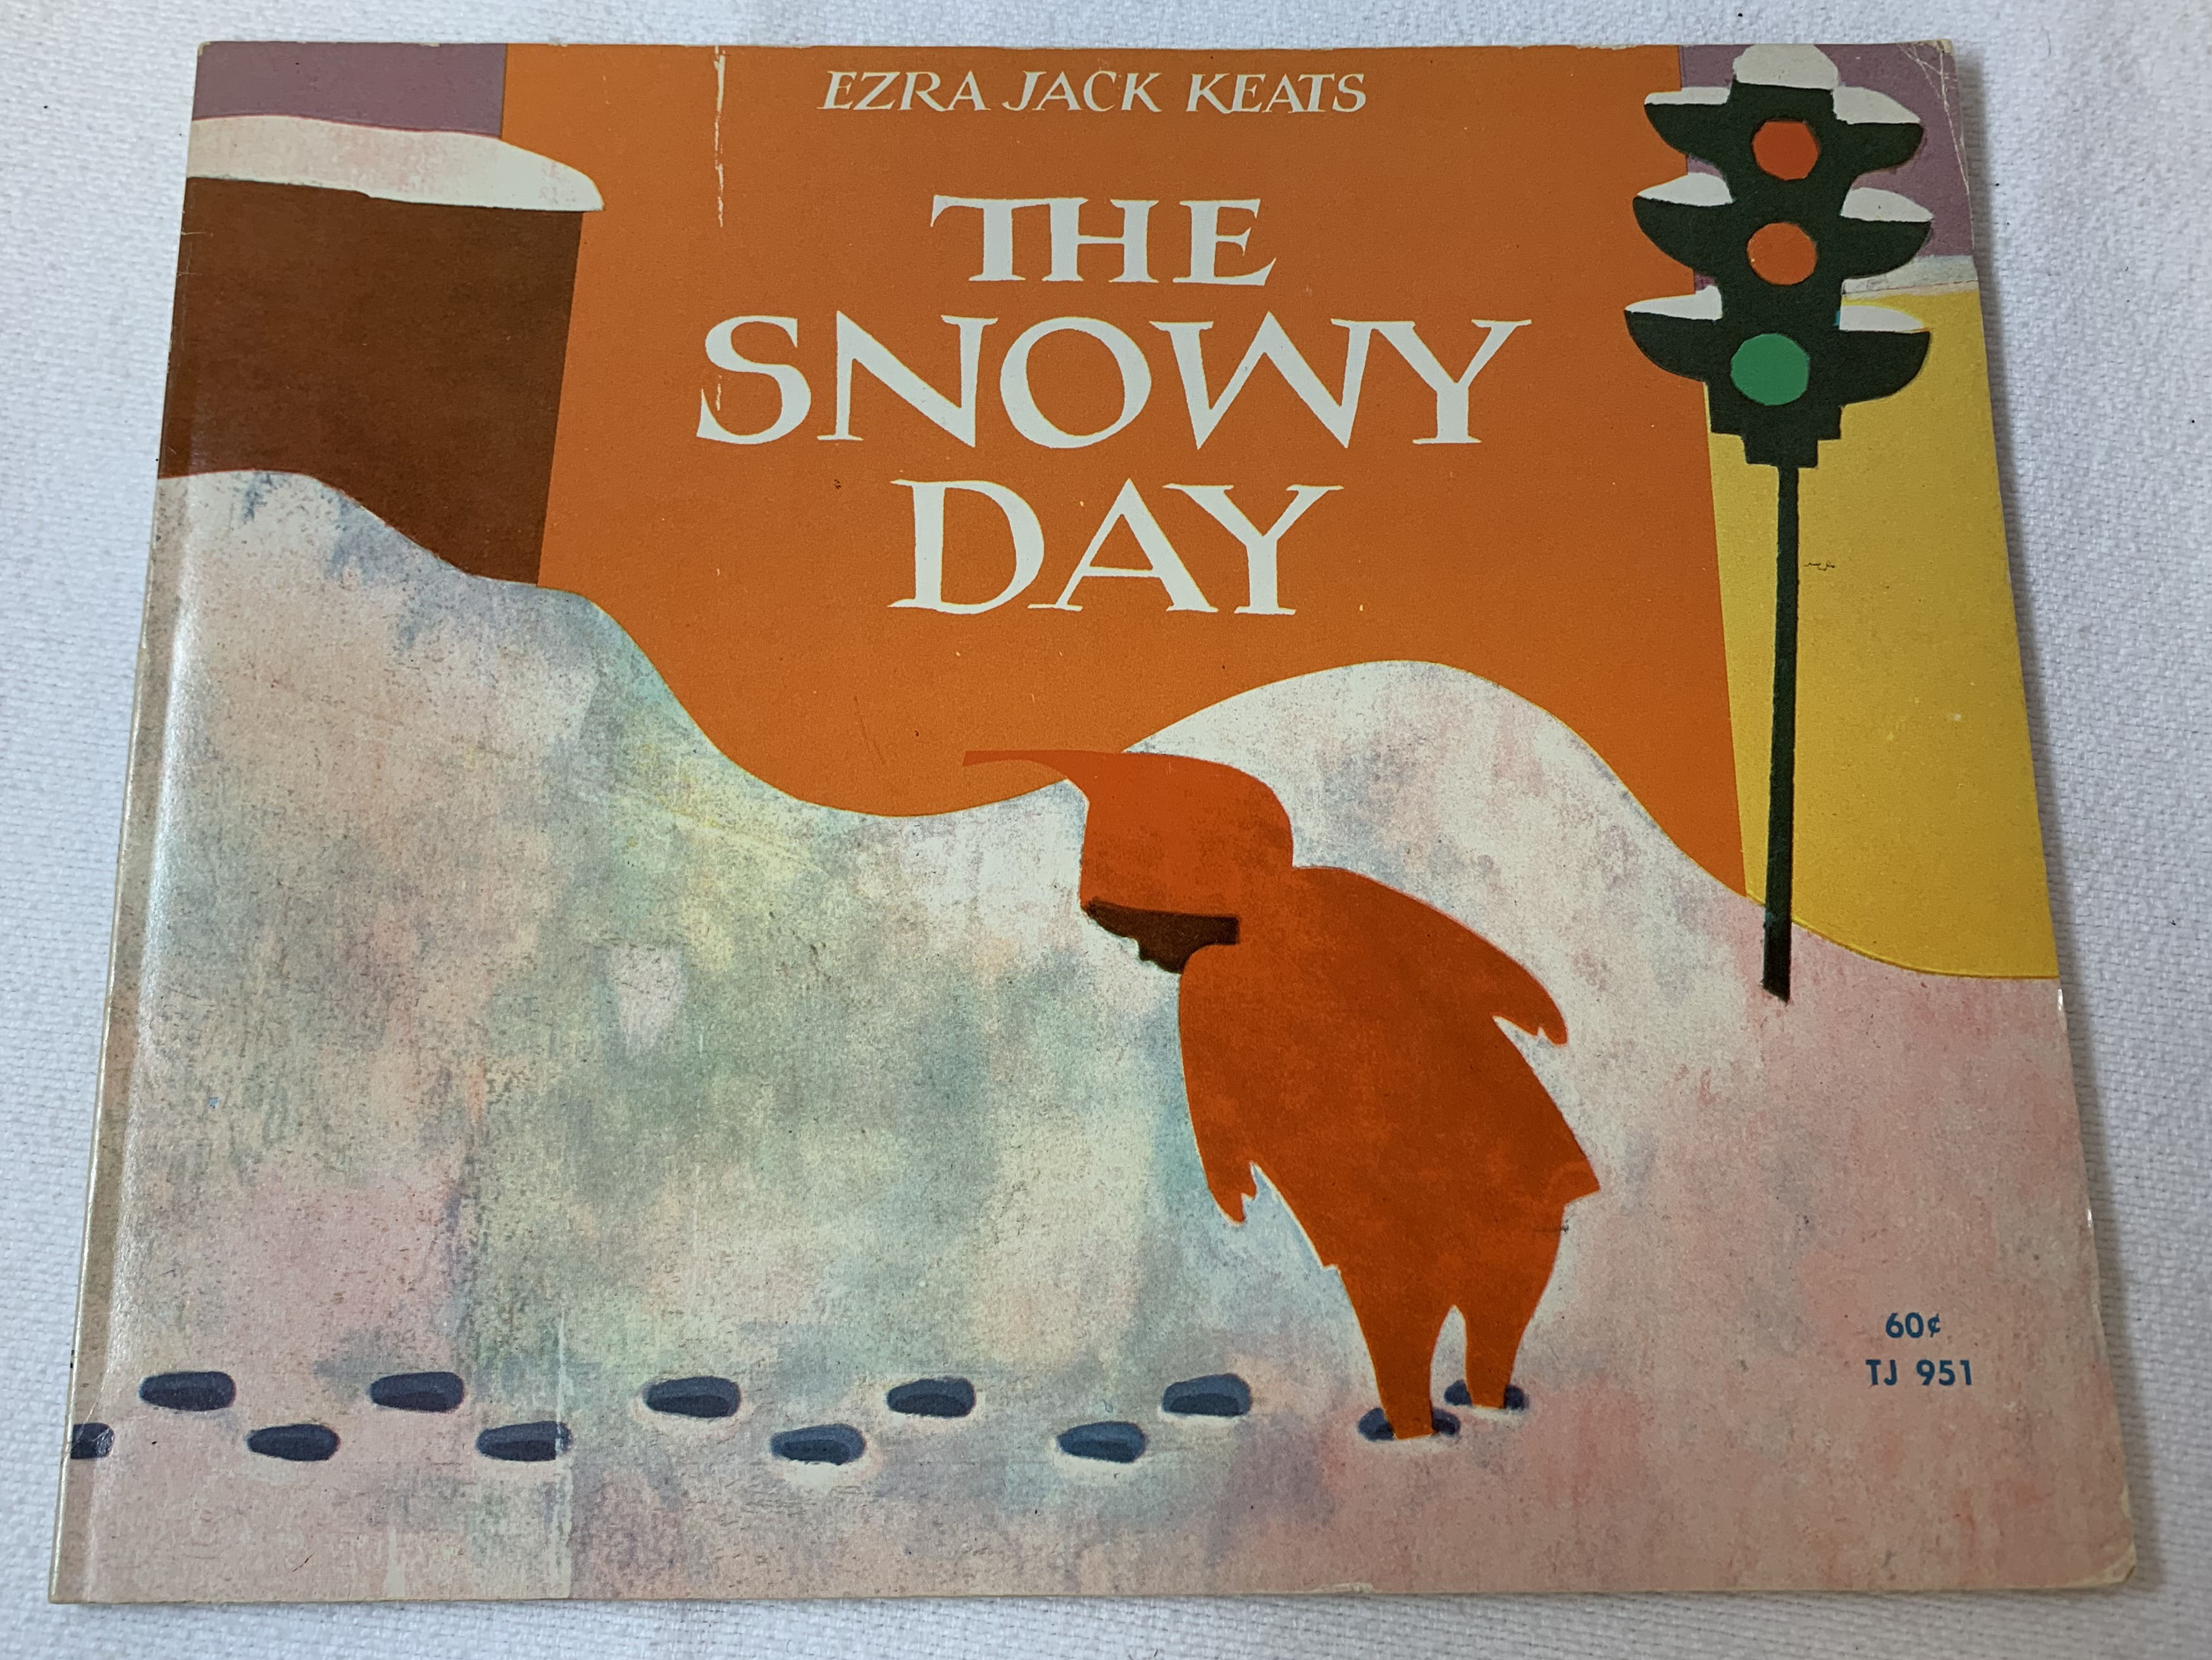 1971-ezra-jack-keats-the-snowy-day-5th-print-ebay